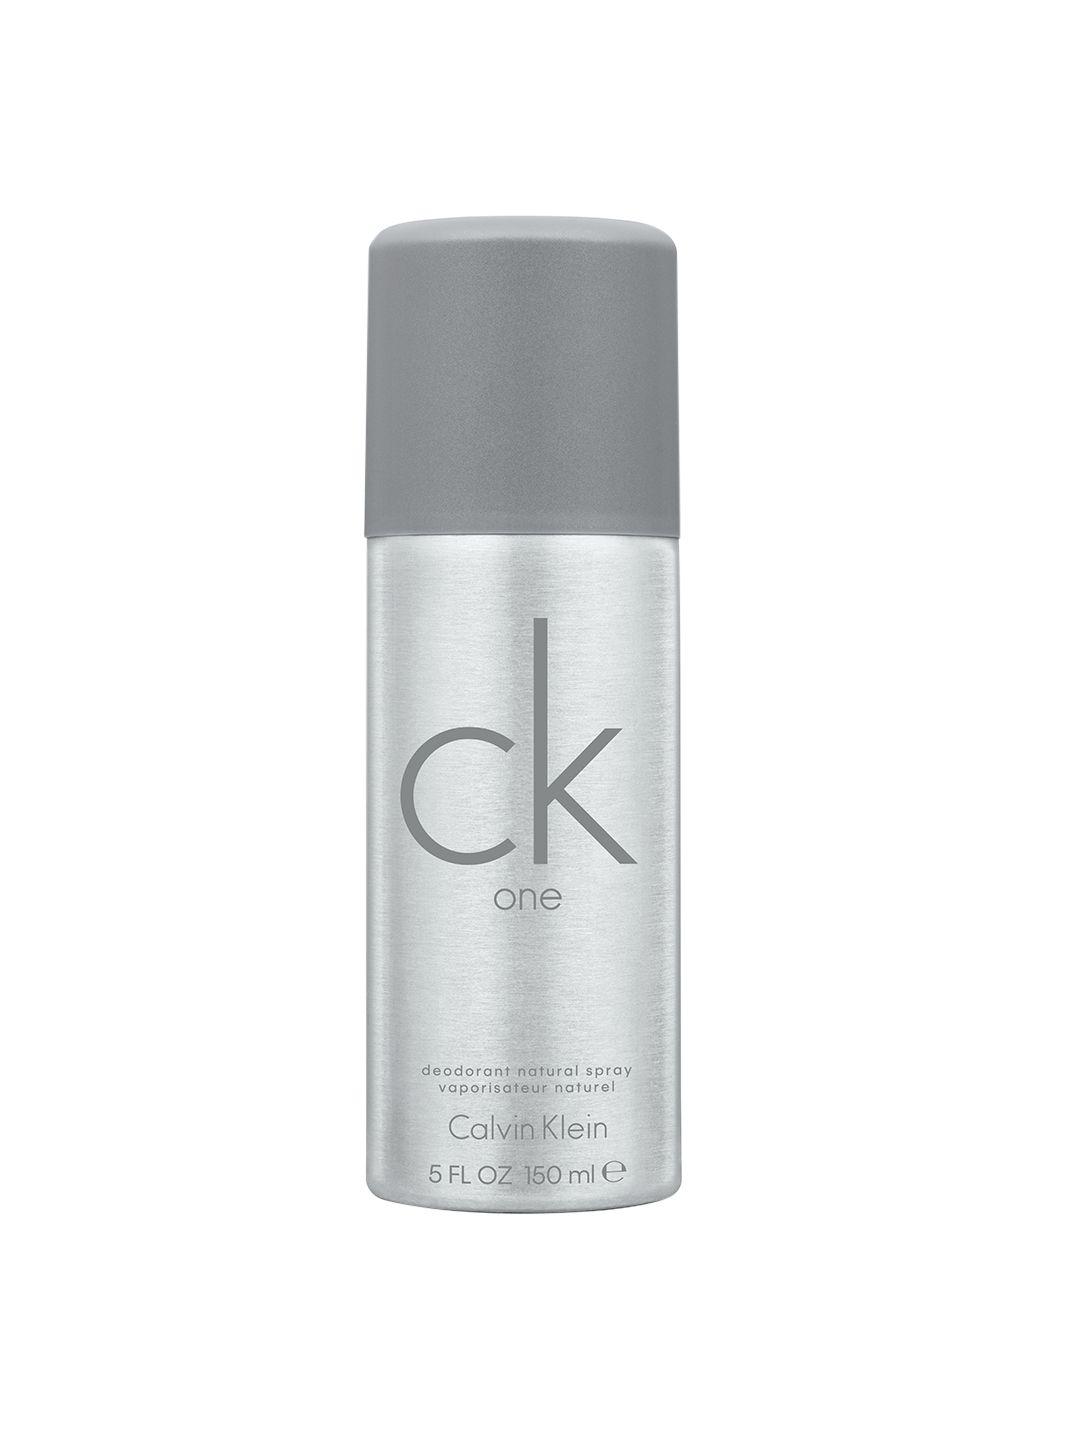 calvin klein ck one deodorant spray - 150ml